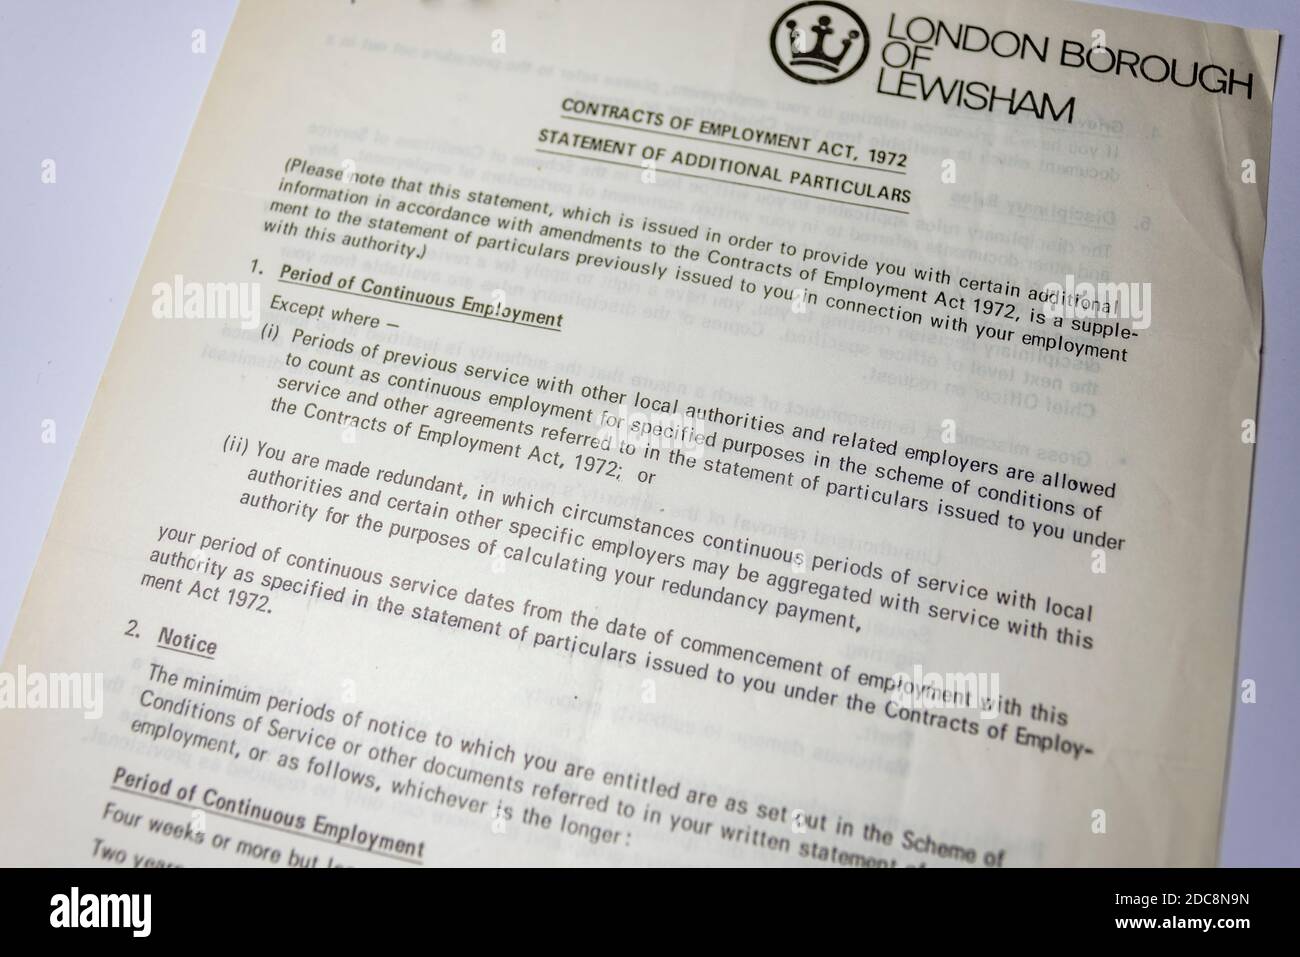 Vintage-Papiere. London Borough of Lewisham, Contracts of Employment Act 1972, zusätzliche Angaben. 70er Jahre. Rat Stockfoto